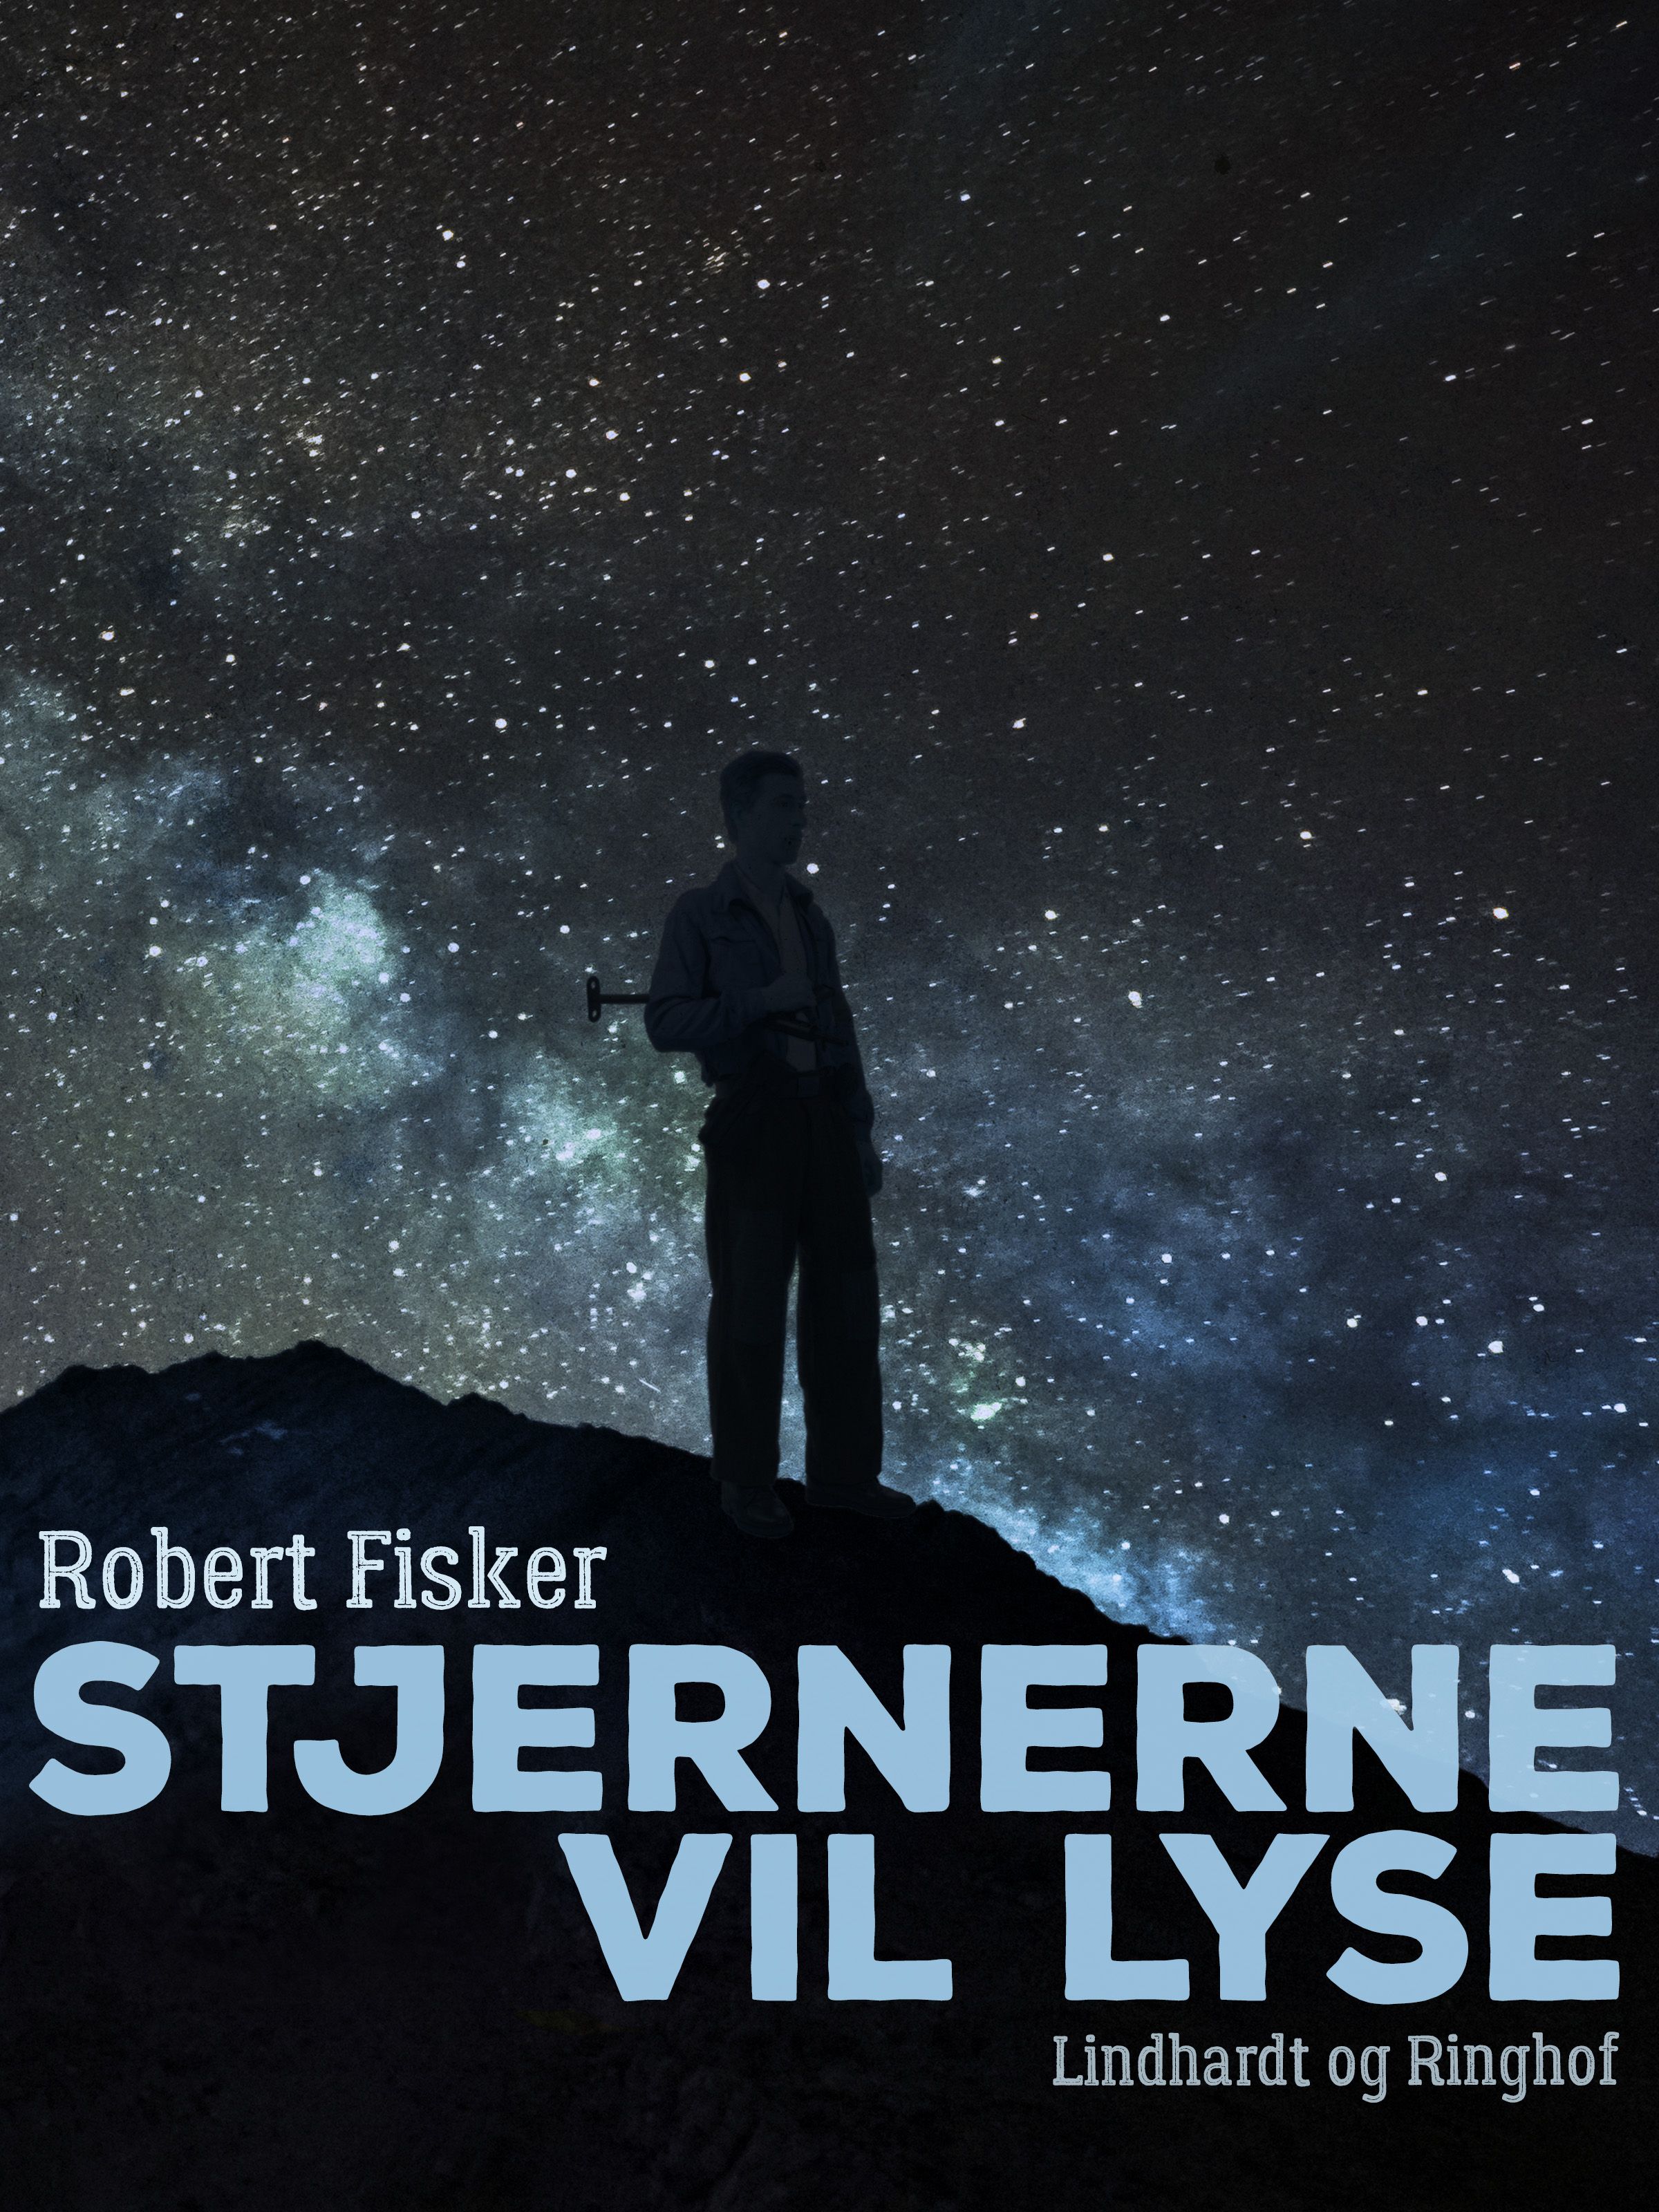 Stjernerne vil lyse, ljudbok av Robert Fisker